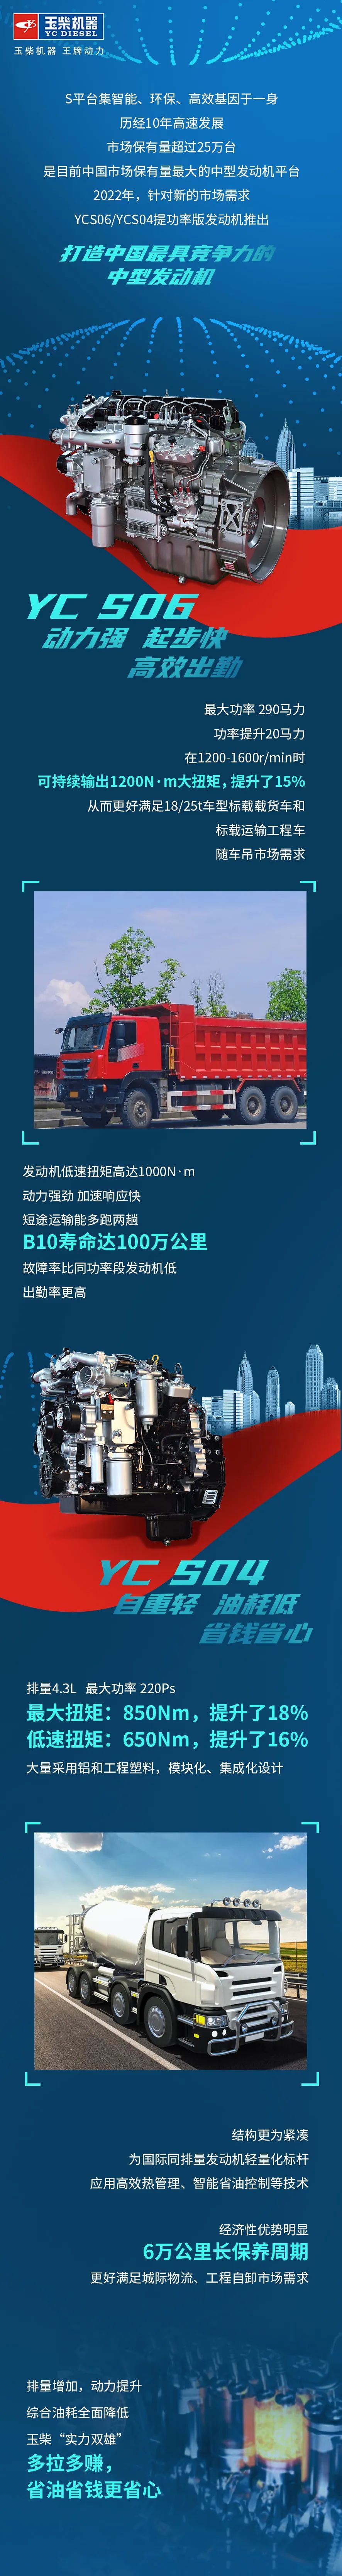 YCS04、YCS06提功率版推出 打造中国最具竞争力的中型发动机